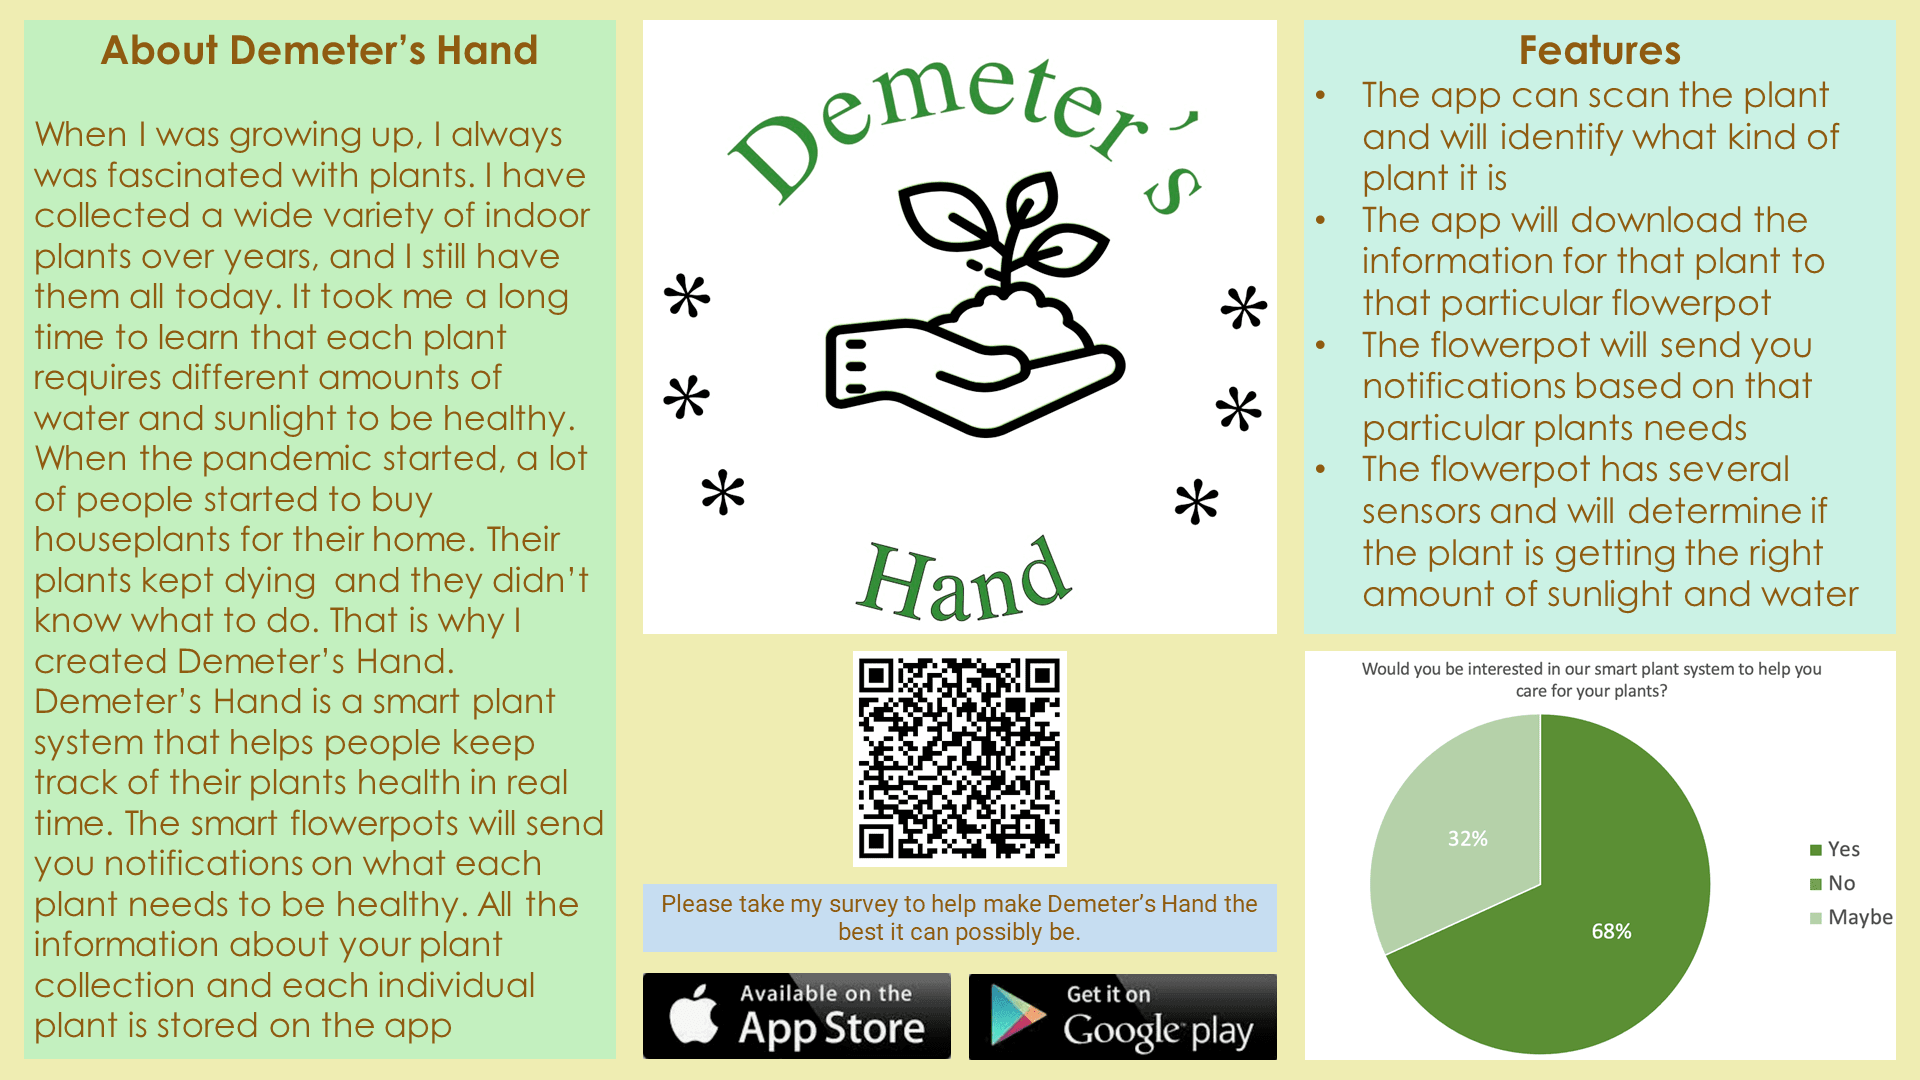 Demeters Hand